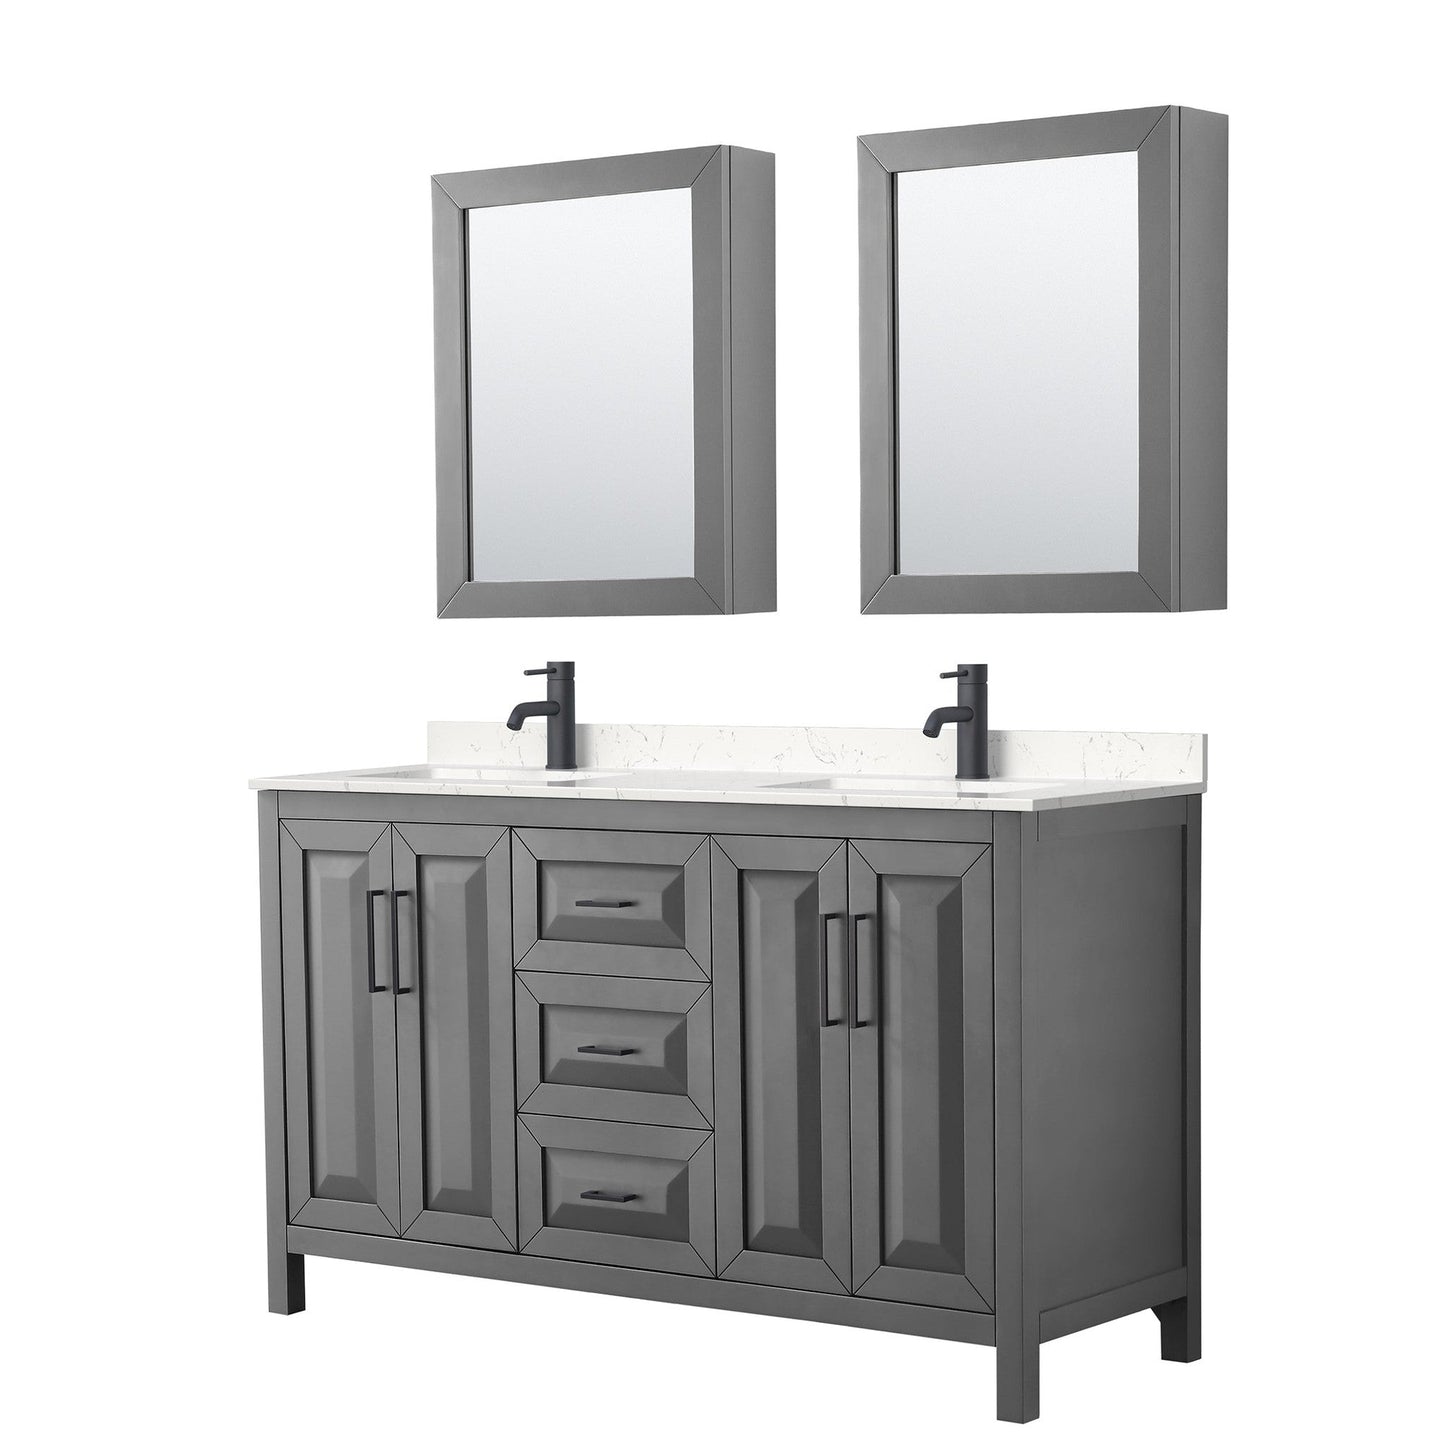 Daria 60" Double Bathroom Vanity in Dark Gray, Carrara Cultured Marble Countertop, Undermount Square Sinks, Matte Black Trim, Medicine Cabinets